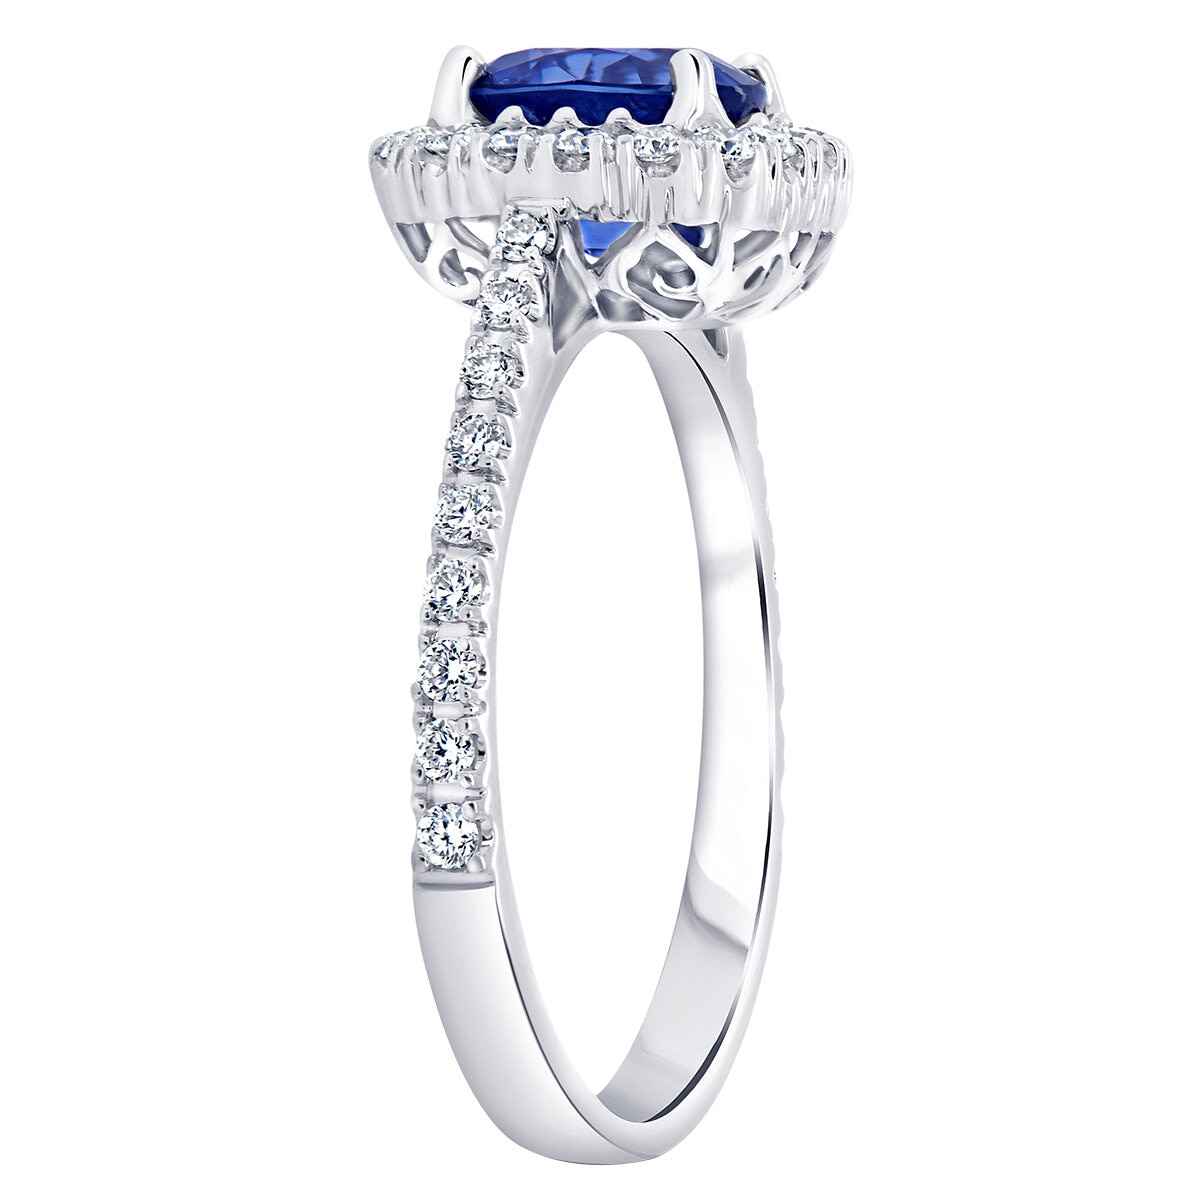 18KT White Gold 0.41ctw Diamond Halo Sapphire Ring